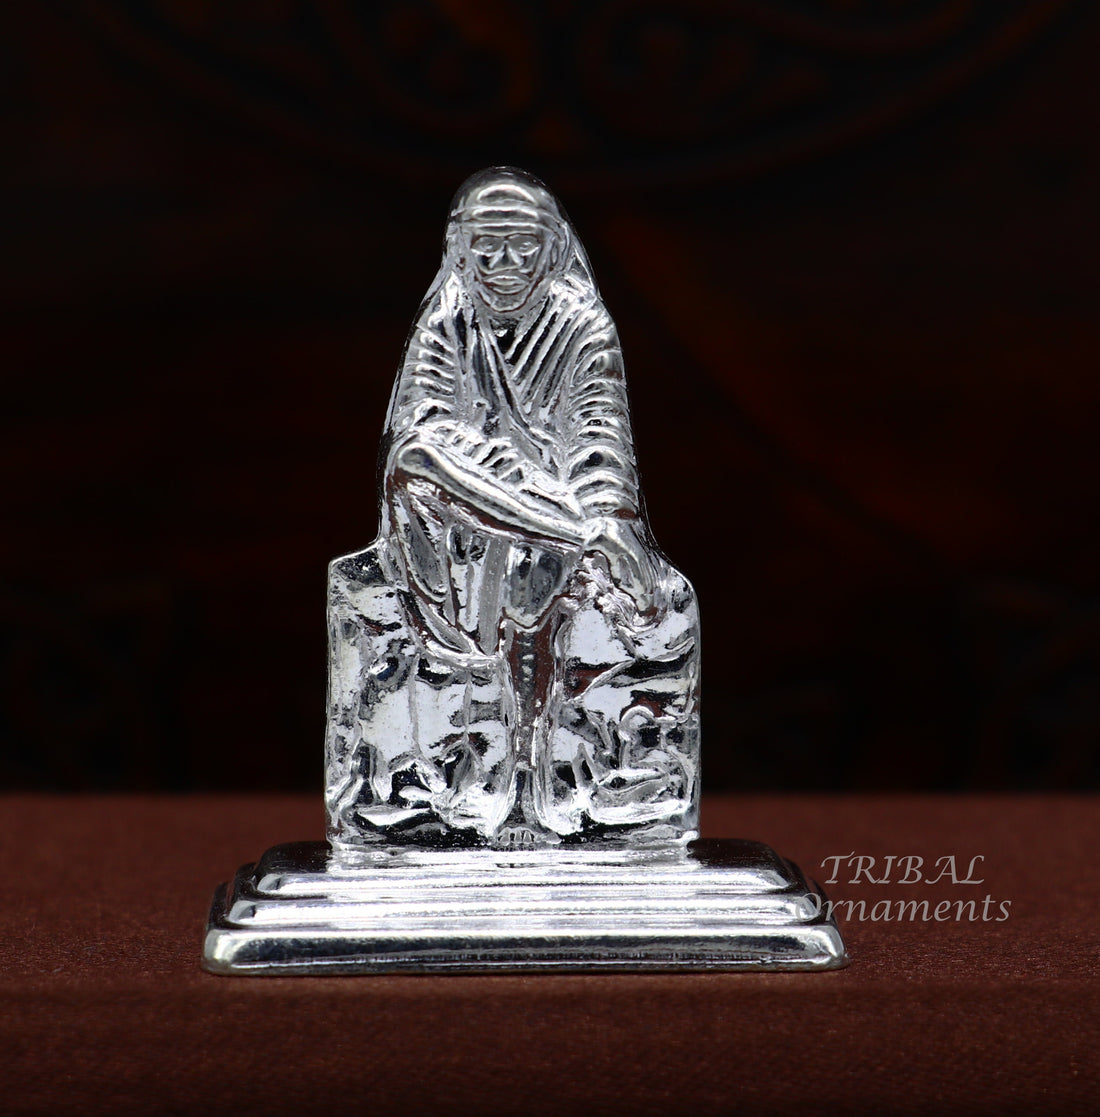 Solid sterling silver handmade Divine Hindu idol deity Sai Baba statue murti divine Statue Sculpture figurine puja article gifting ART553 - TRIBAL ORNAMENTS